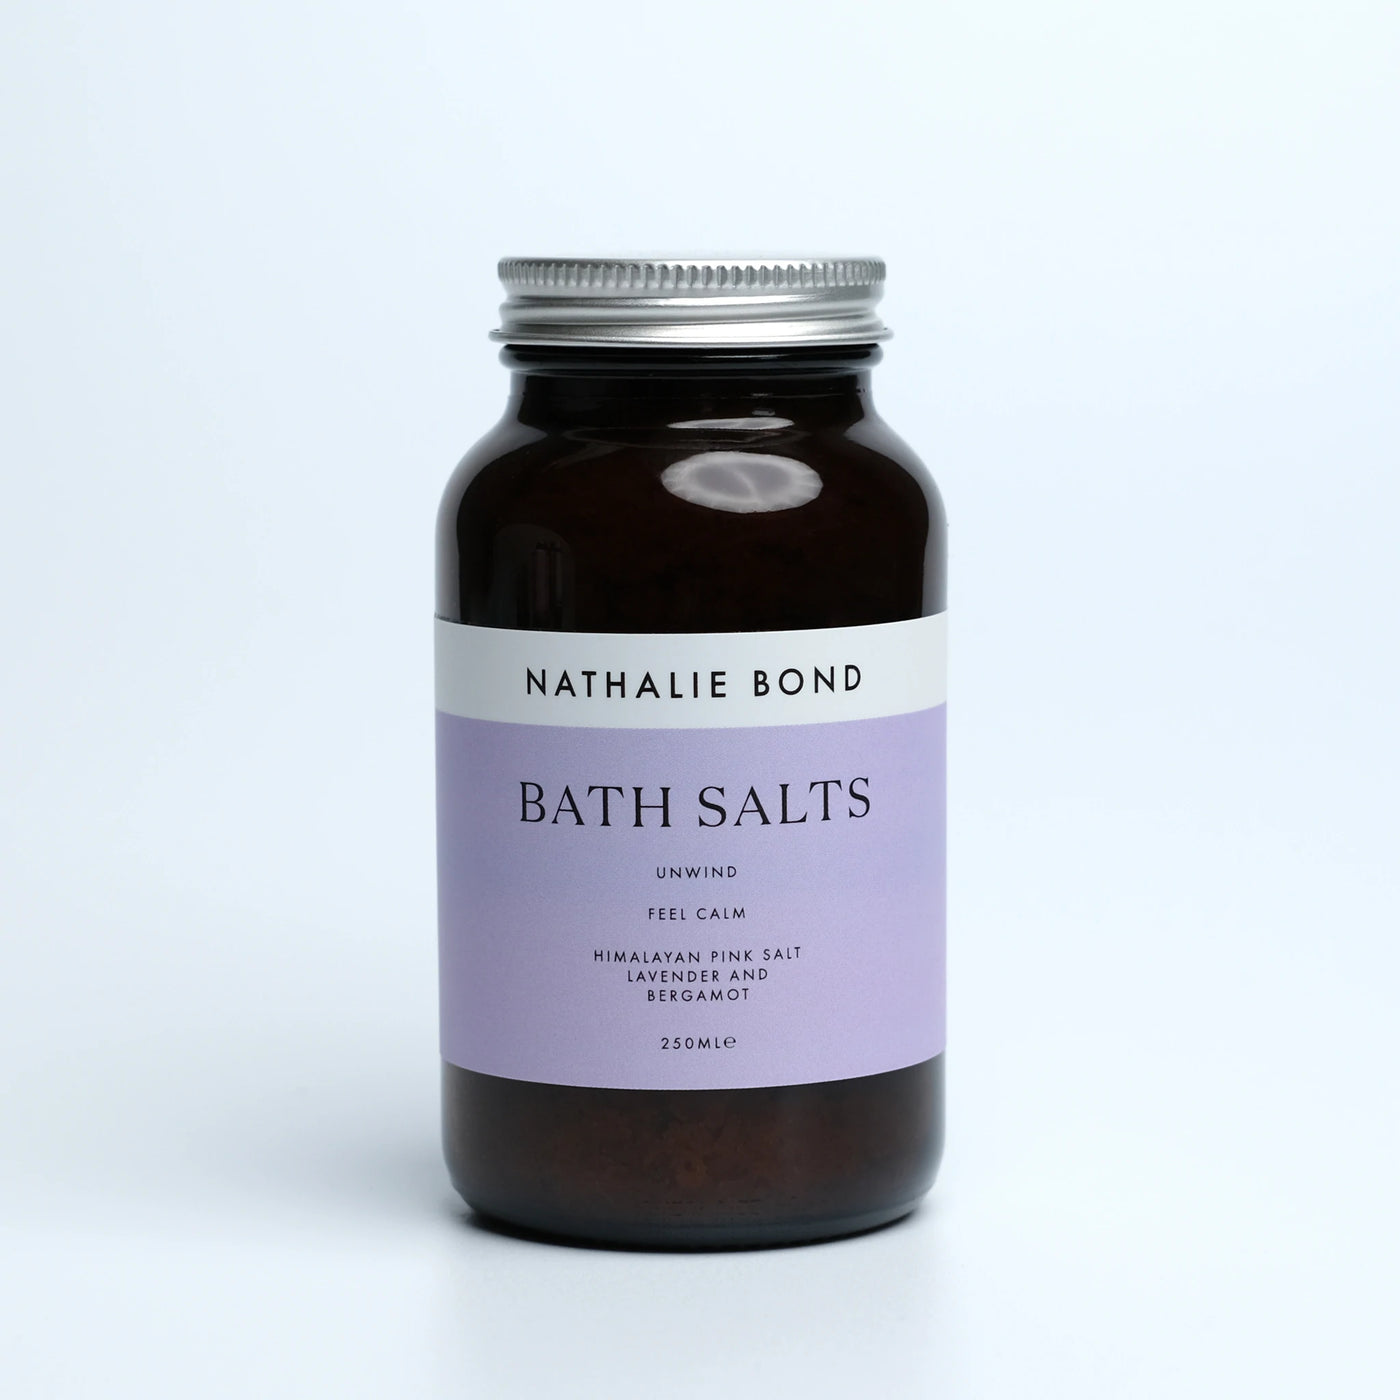 250ml Bath Salts by Nathalie Bond